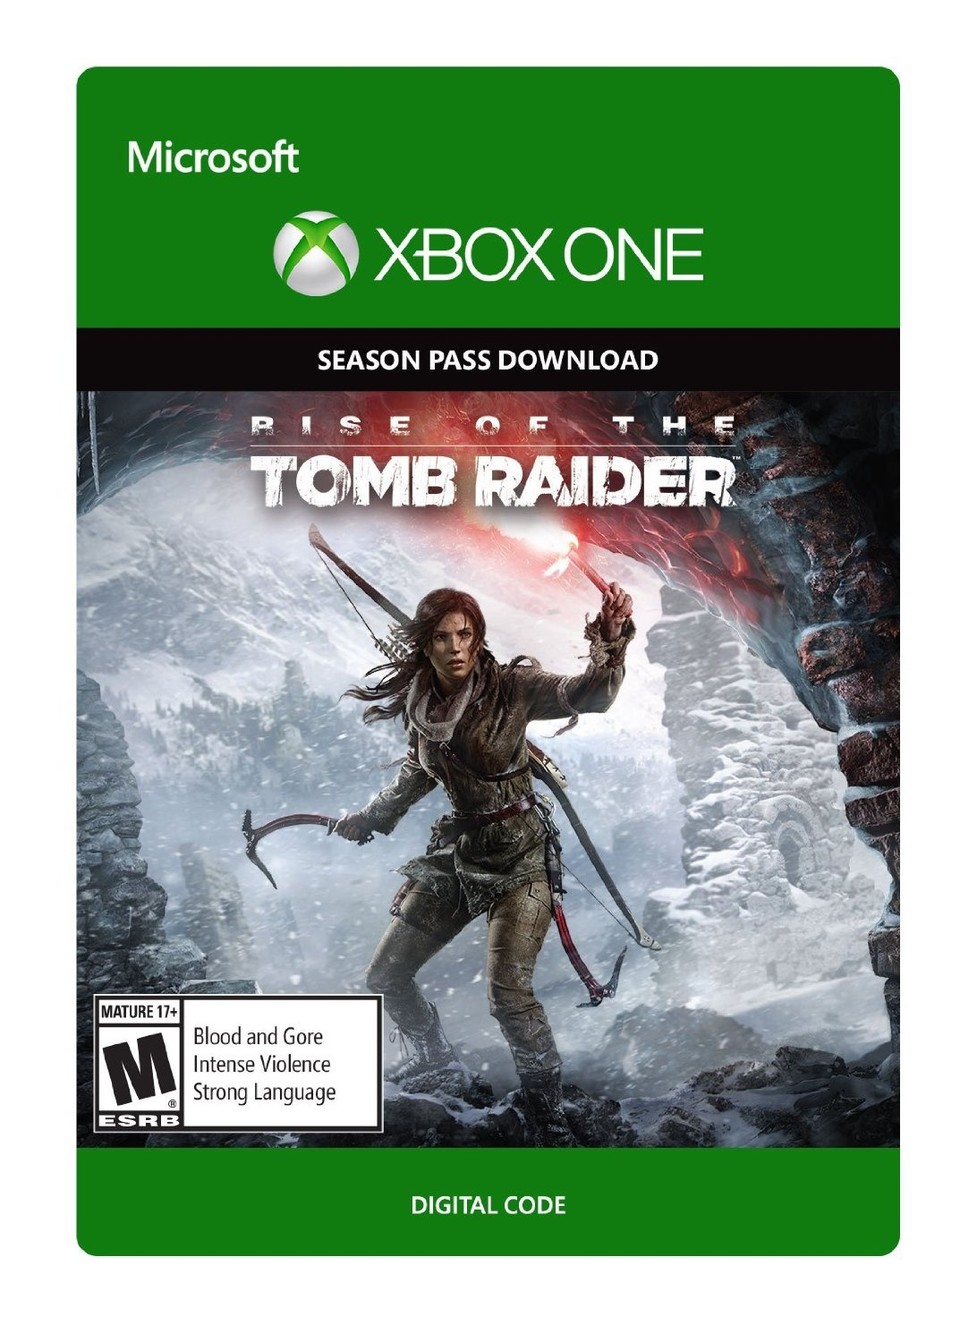 Packshot des Rise of the Tomb Raider Season Pass